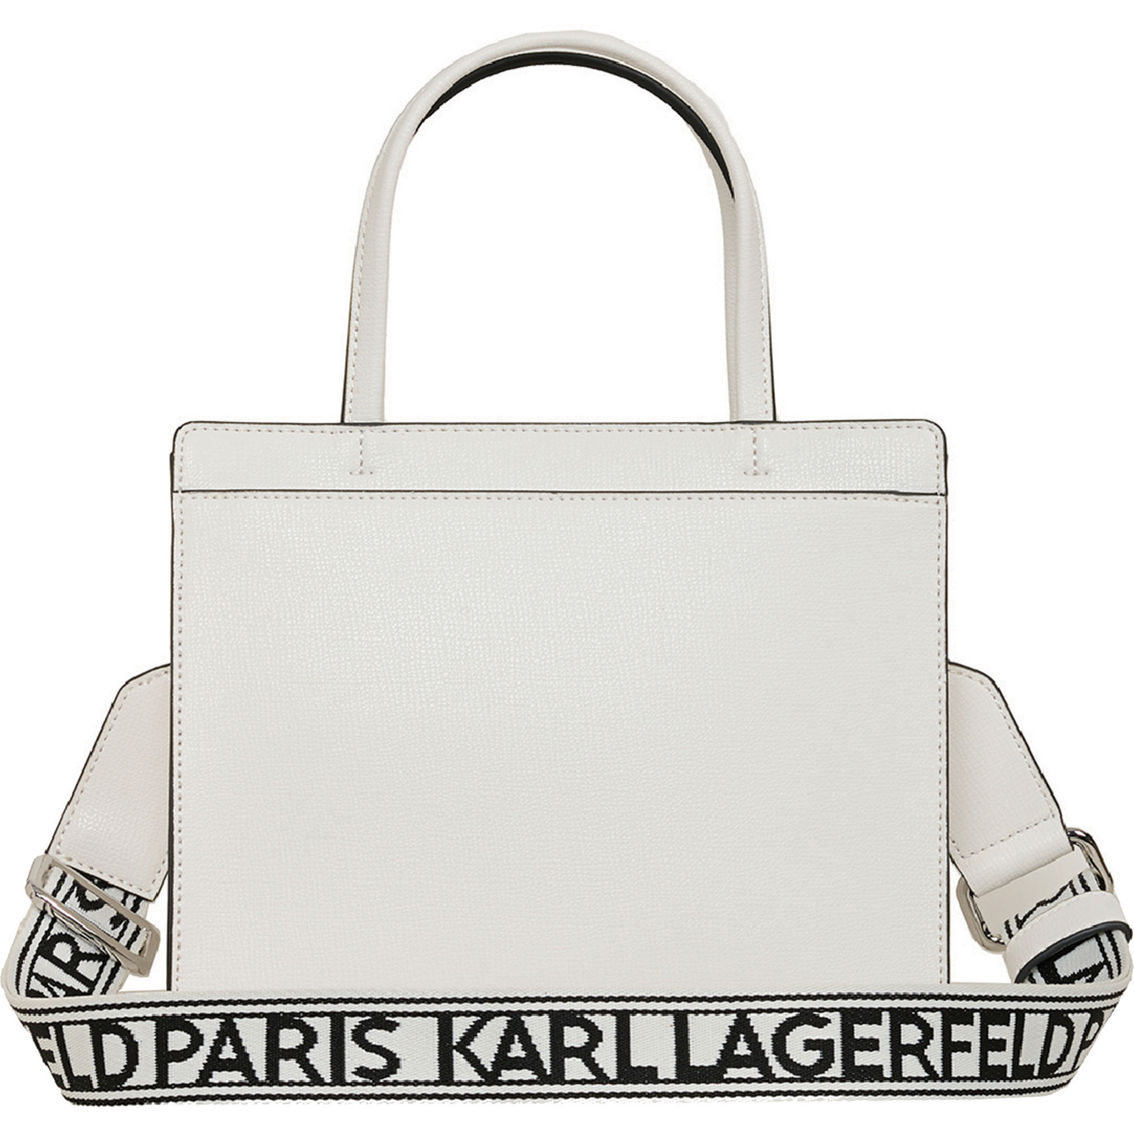 Karl Lagerfeld Maybelle Satchel - Image 2 of 4